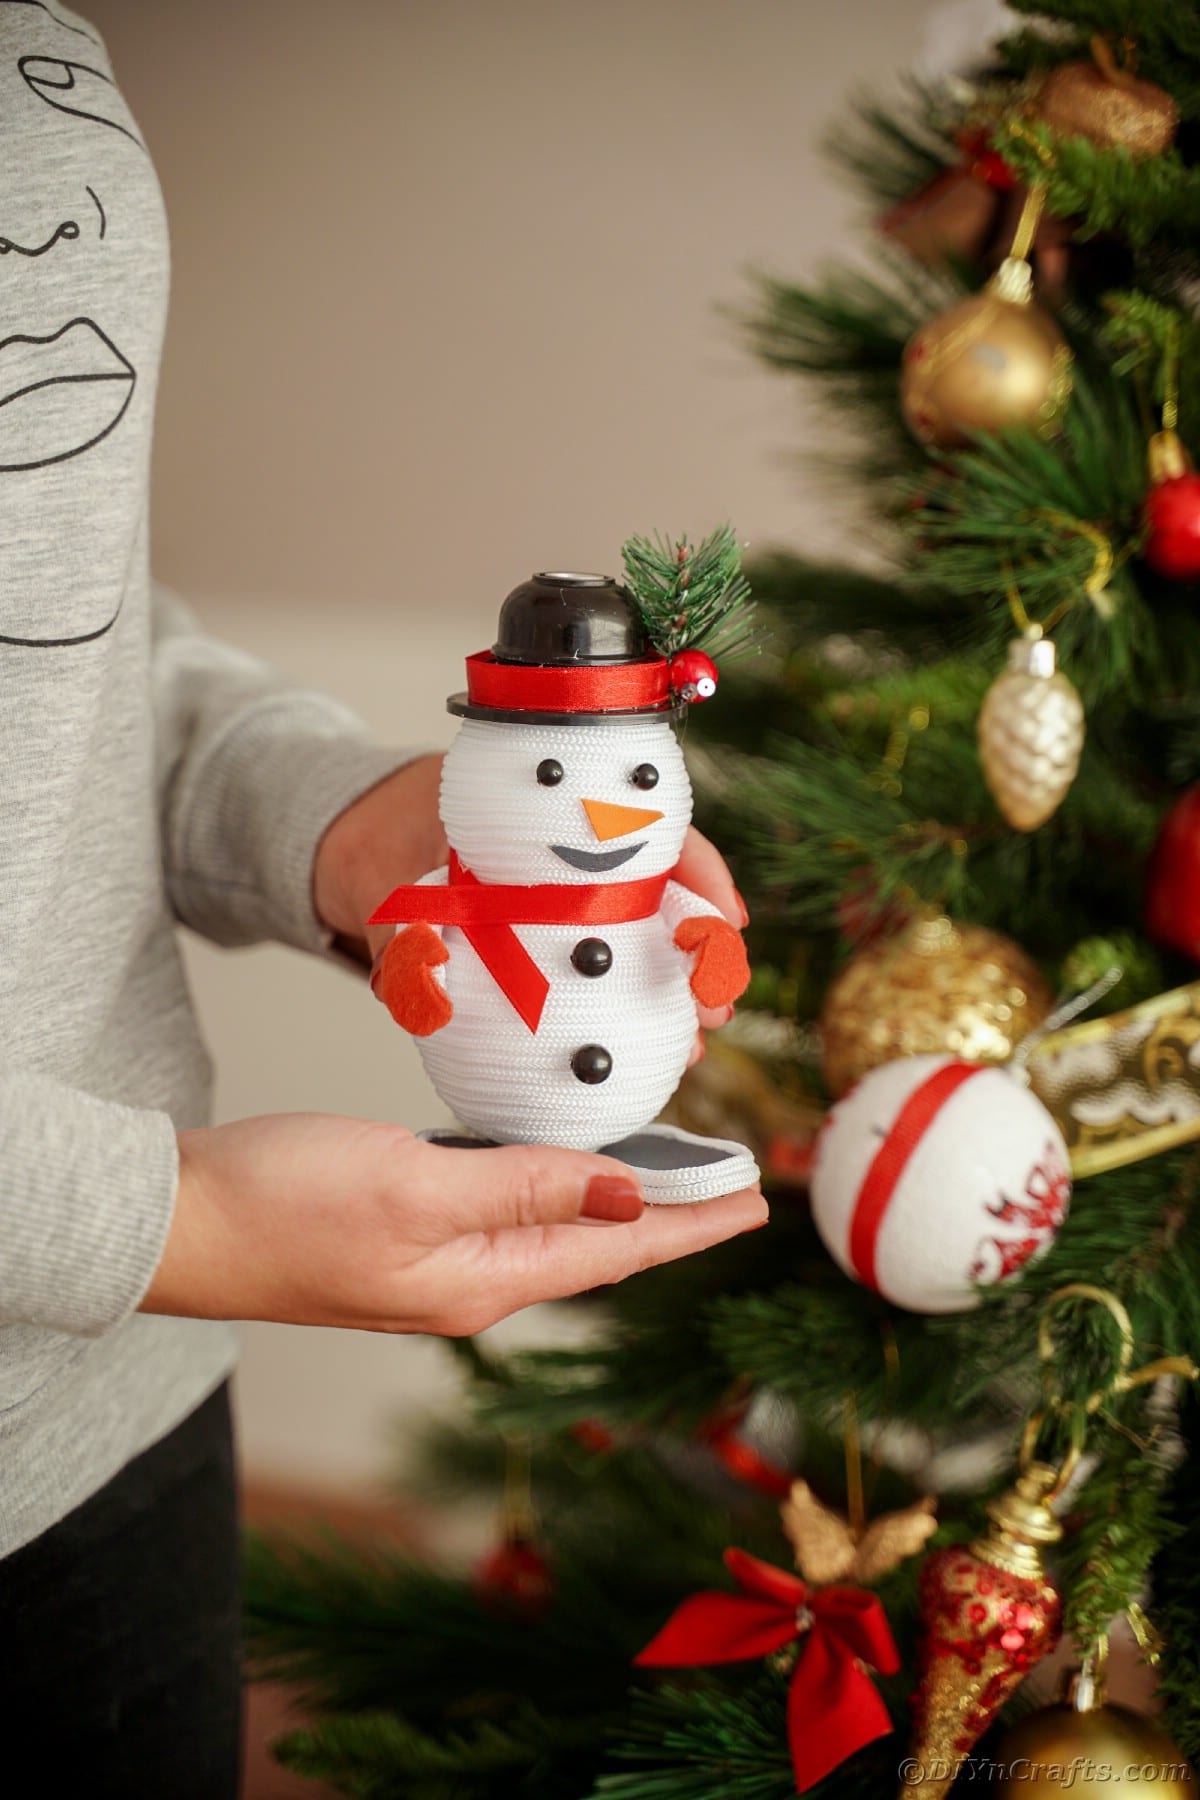 oseba, ki drži okras mini snežaka ob božičnem drevesu